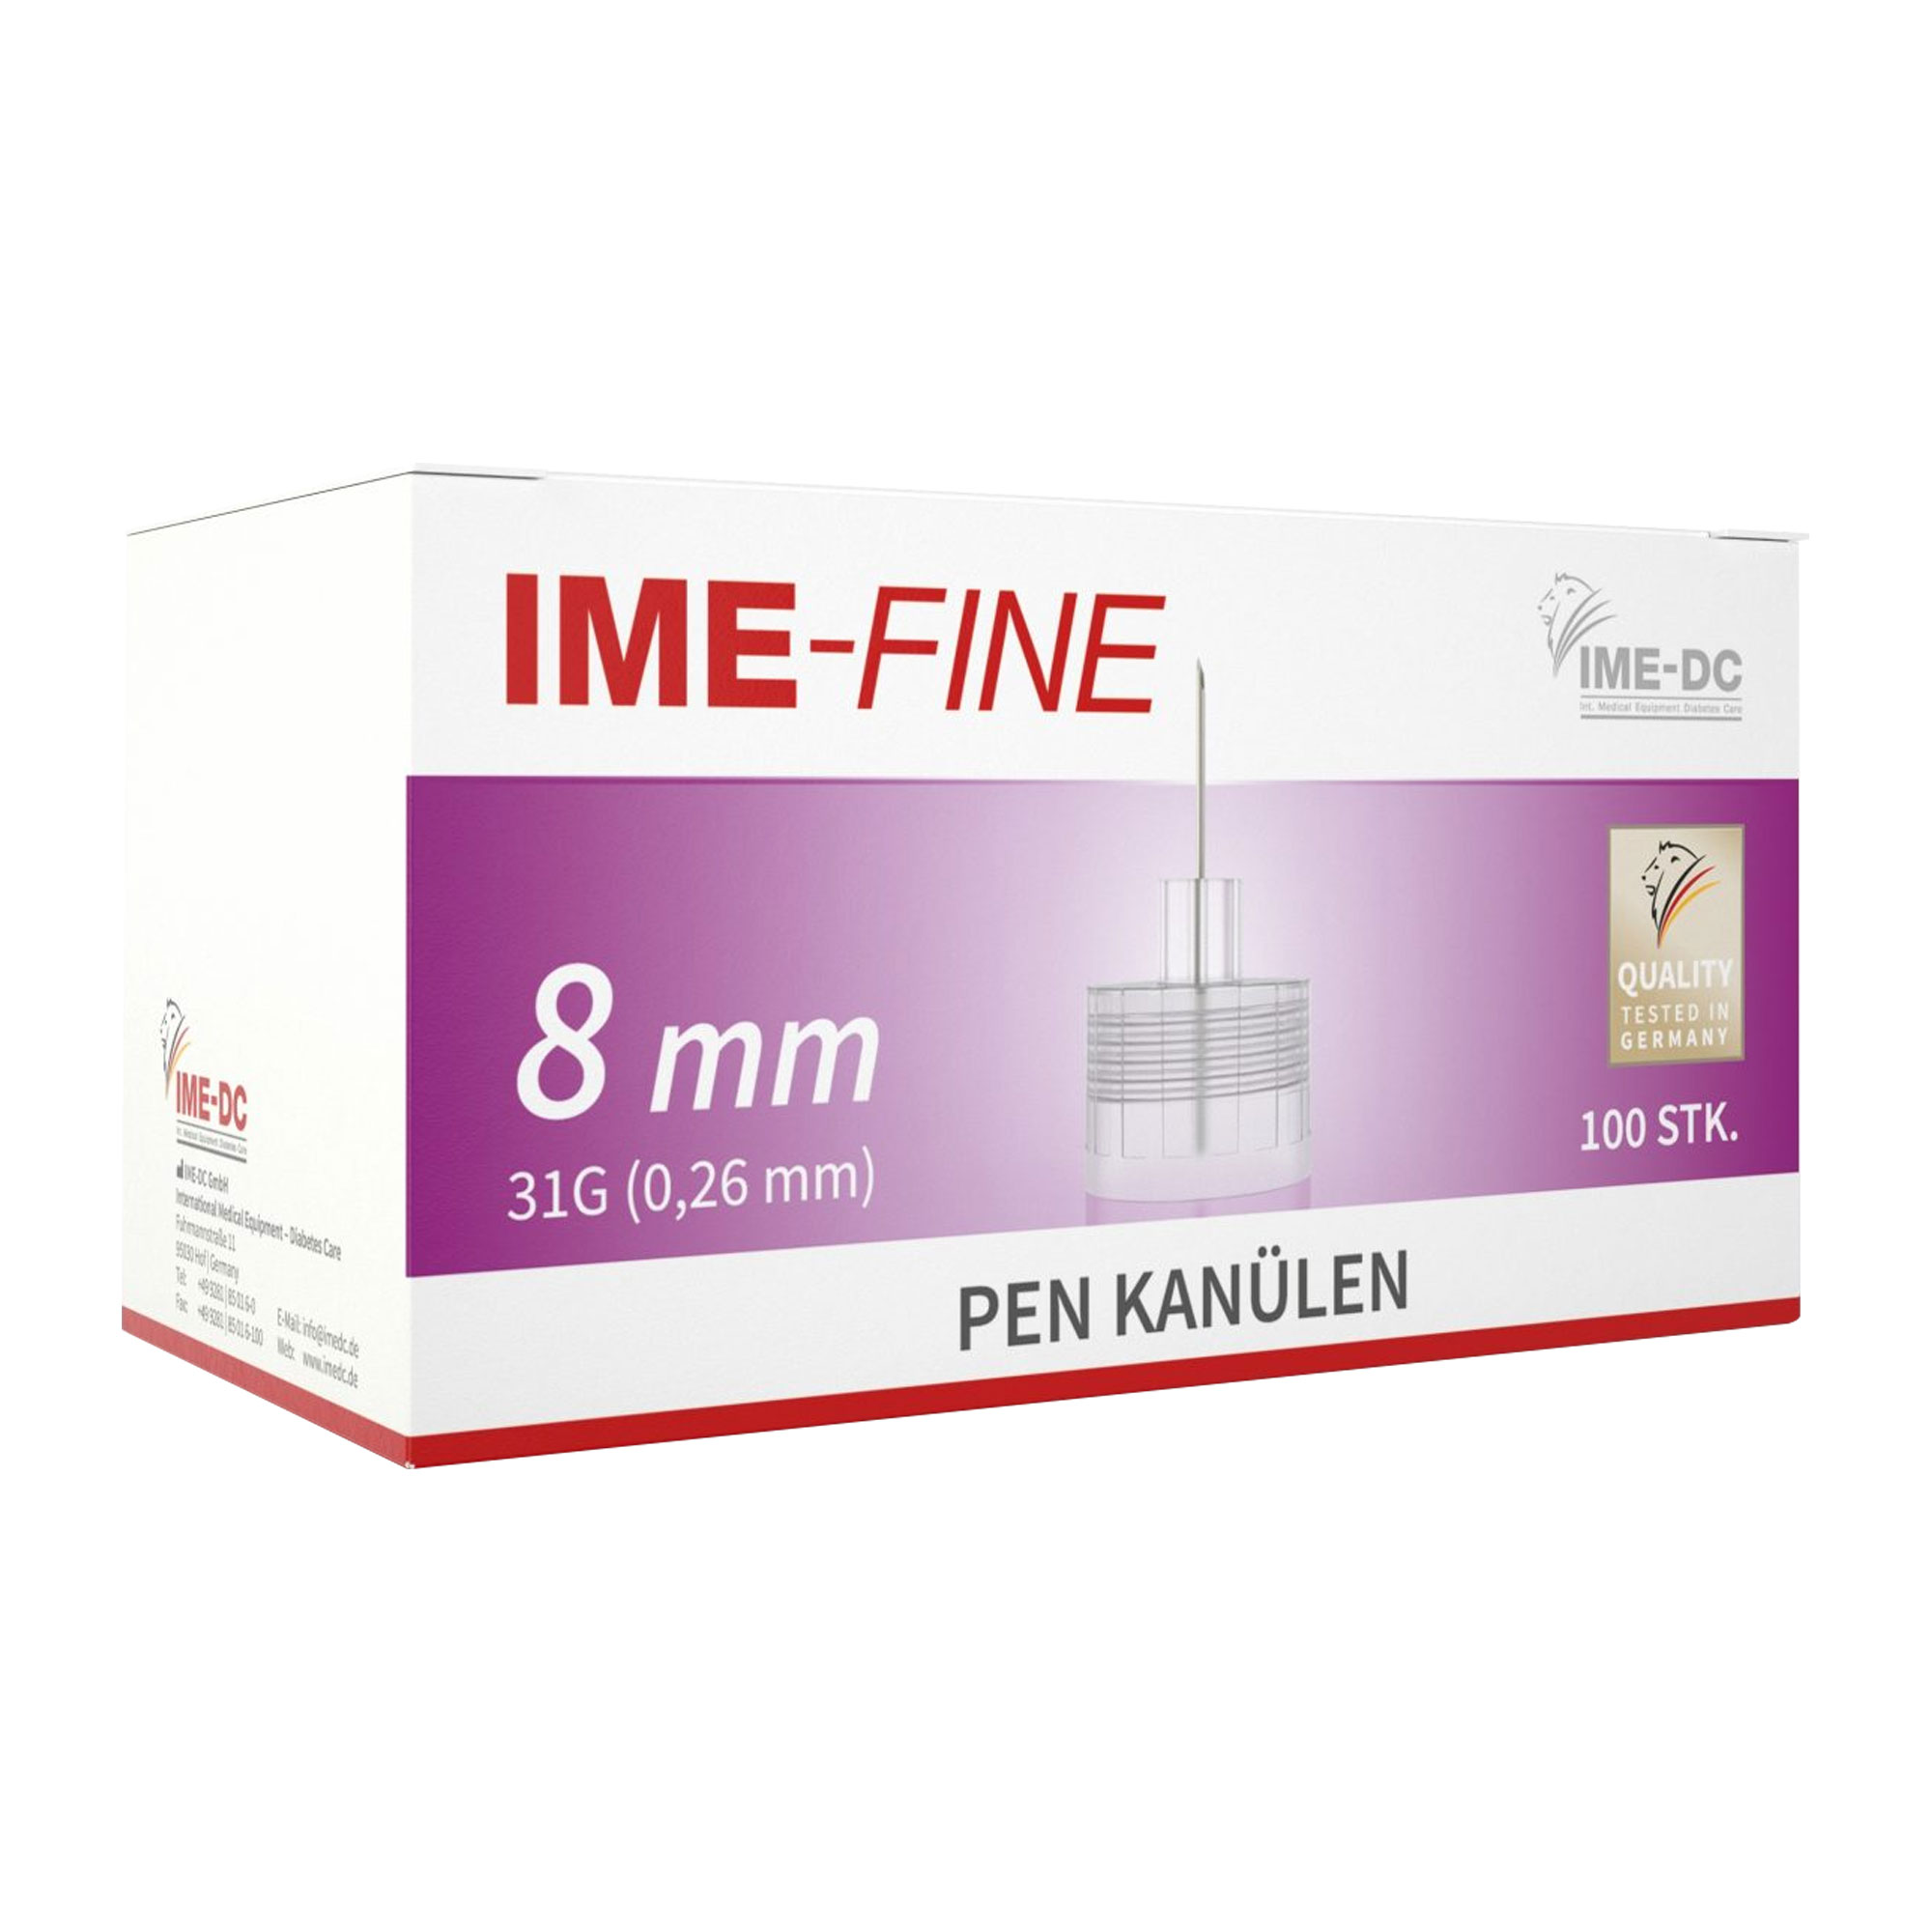 Universal Pen Kanülen zur Insulininjektion.